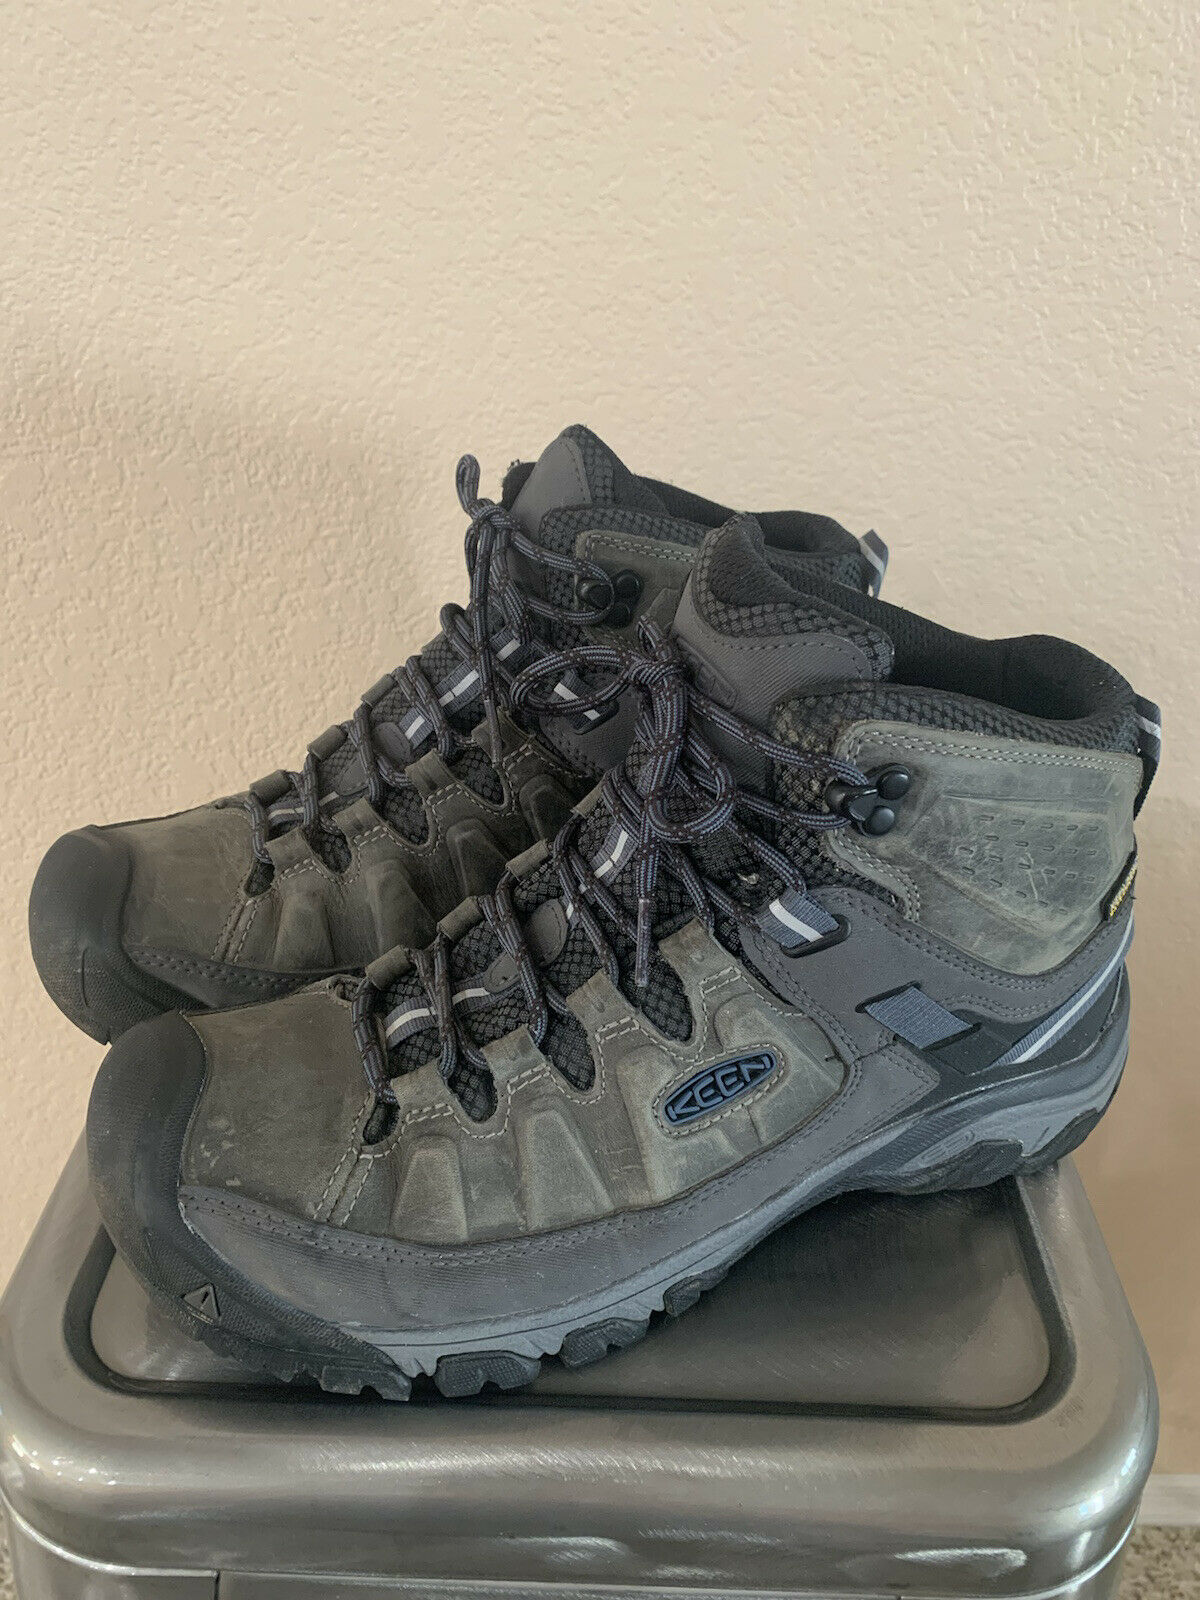 KEEN Targhee III Waterproof Mid Boots Leather Hiking Shoes 1017788 Men's Size 10